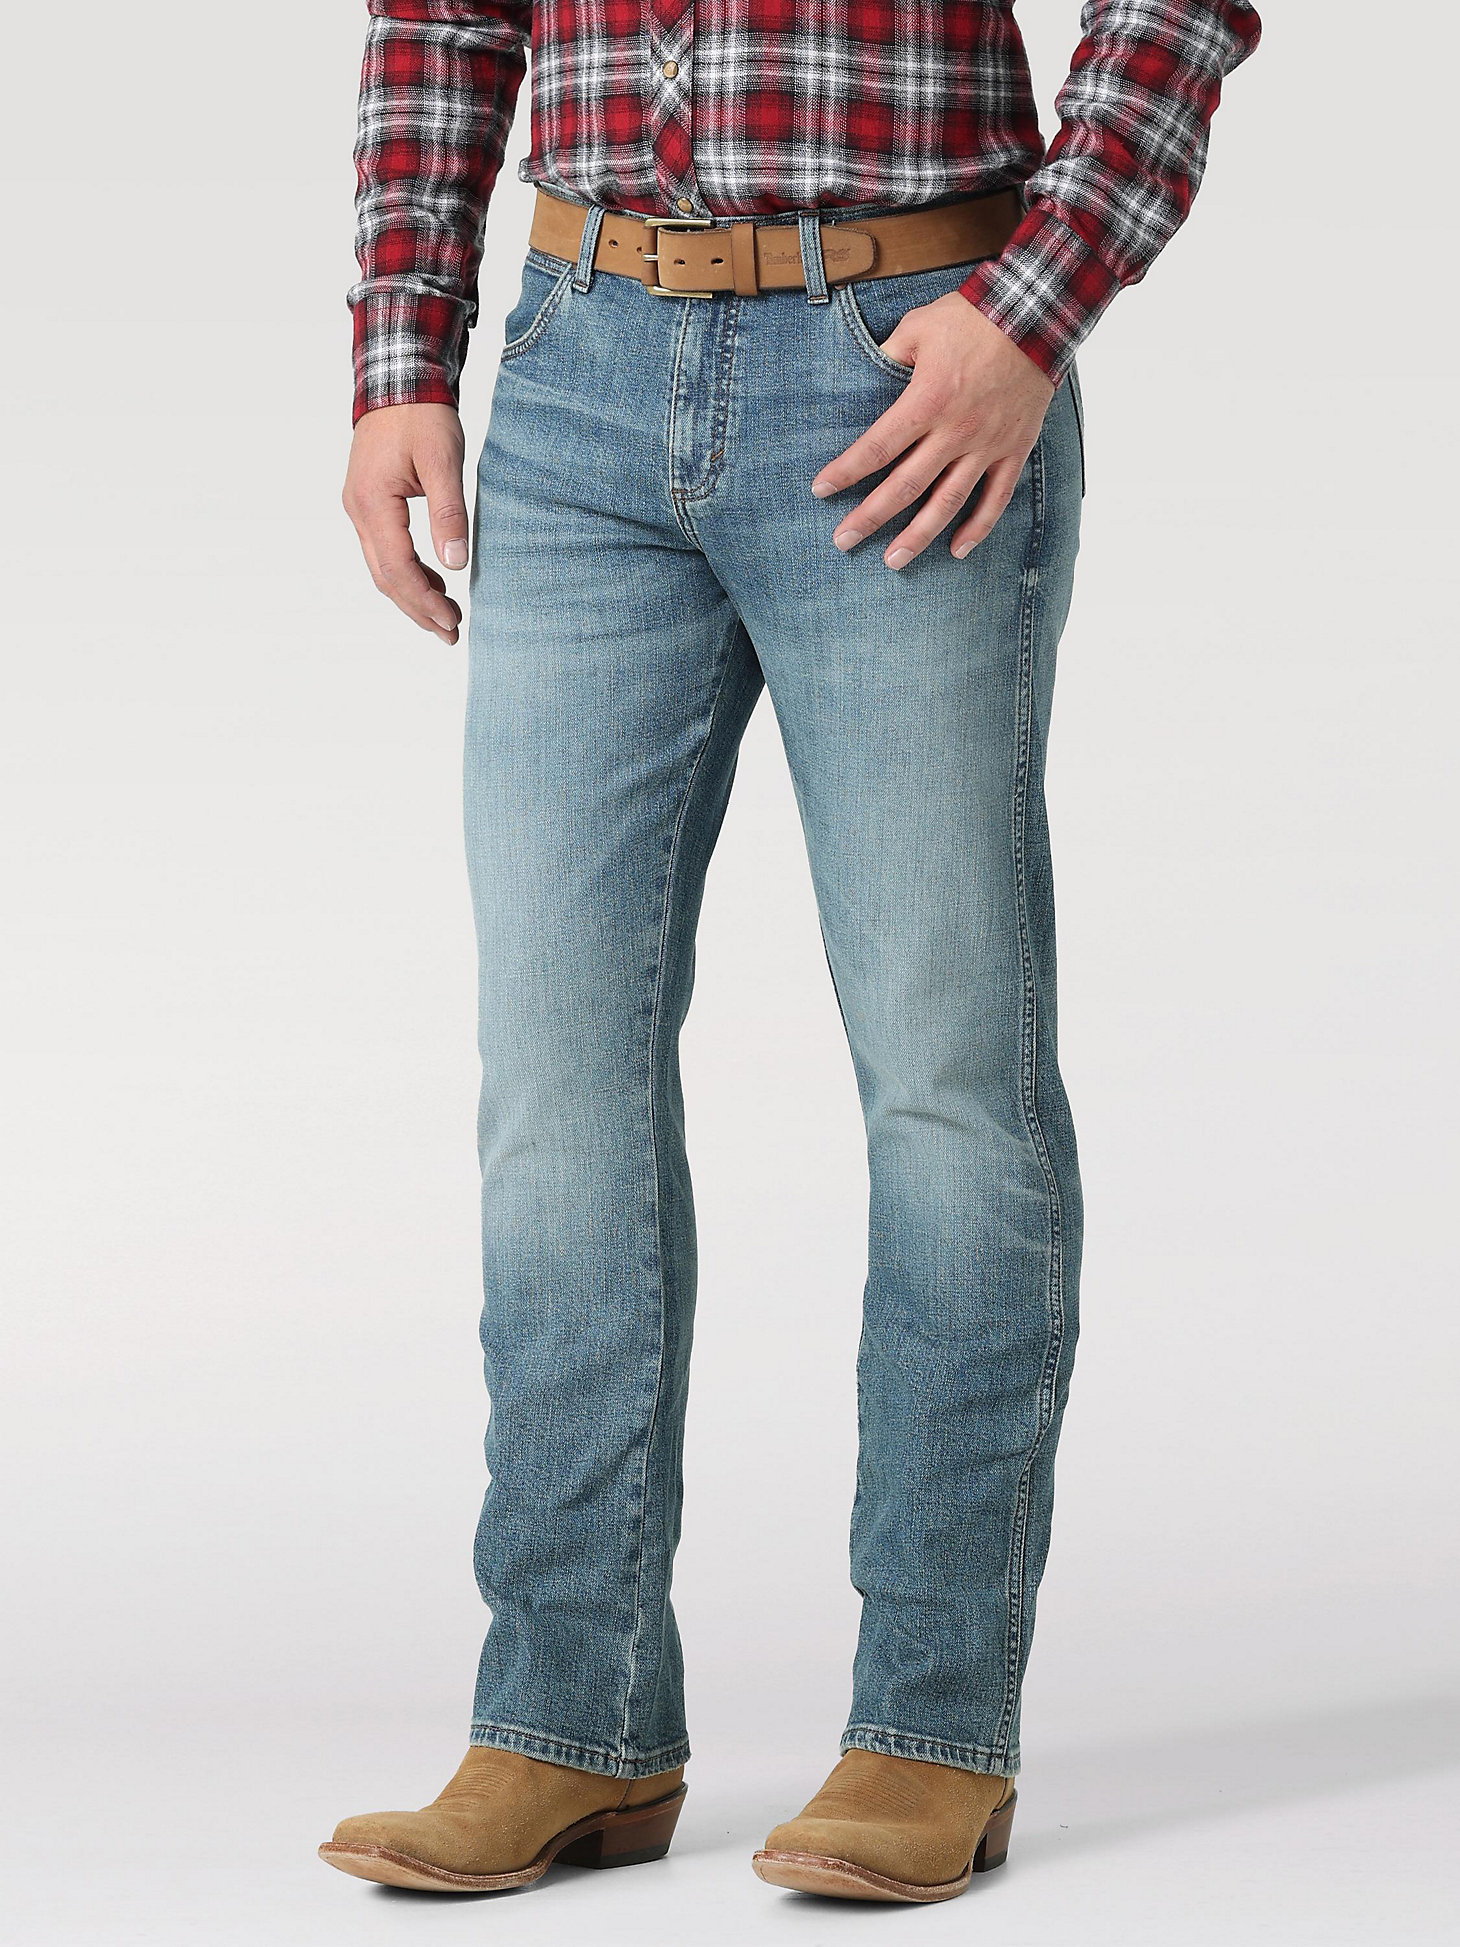 The Wrangler Retro® Green Jean: Men's Slim Boot in Valley main view